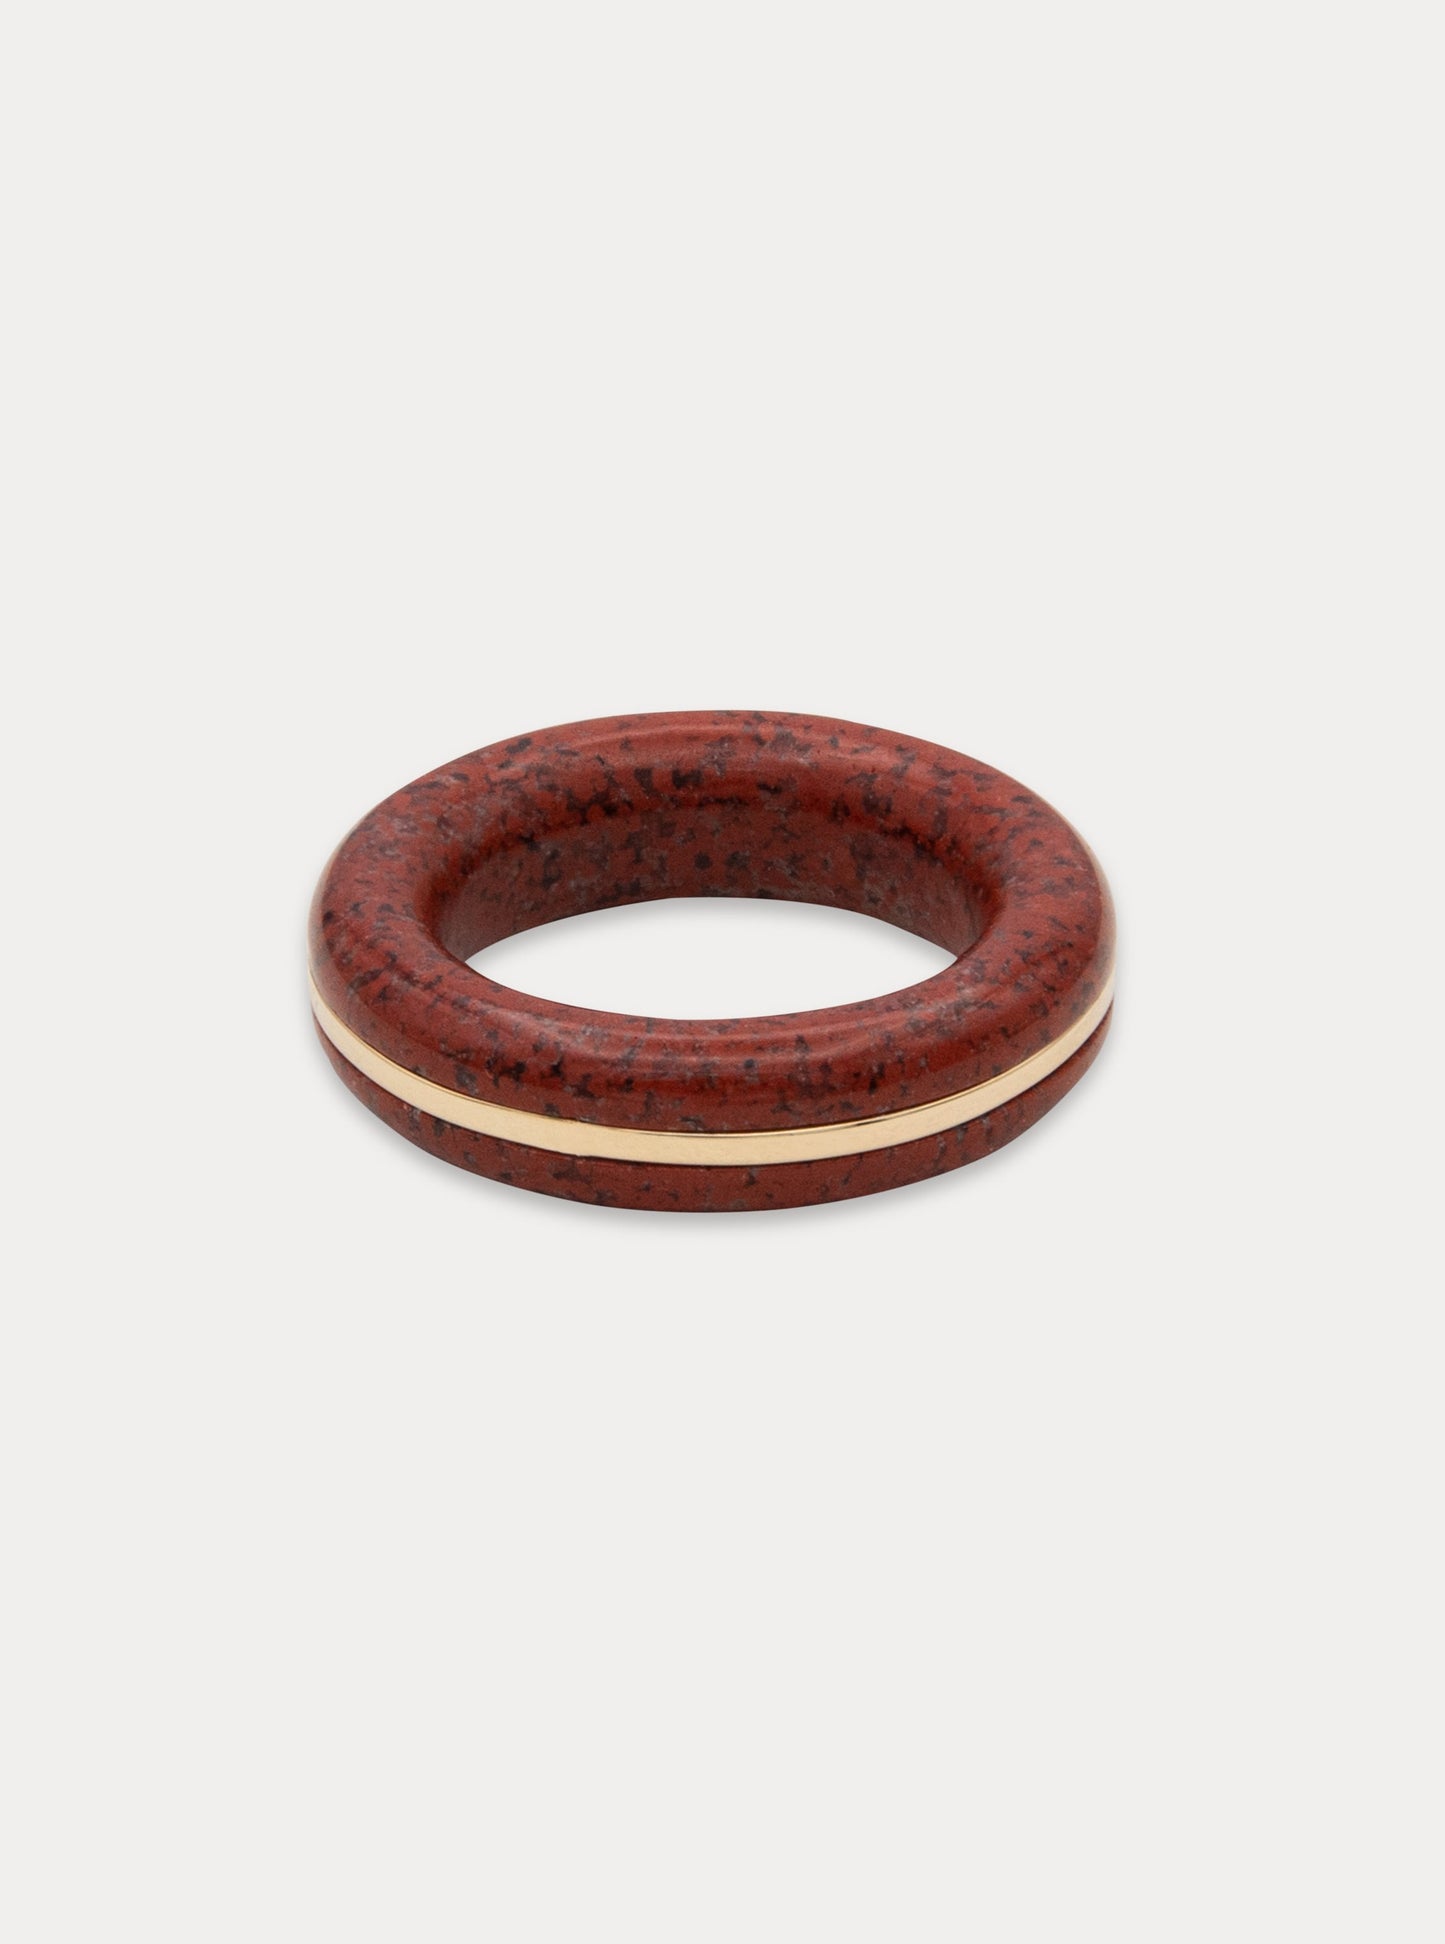 Essential Gem Stacking Ring - Red Jasper